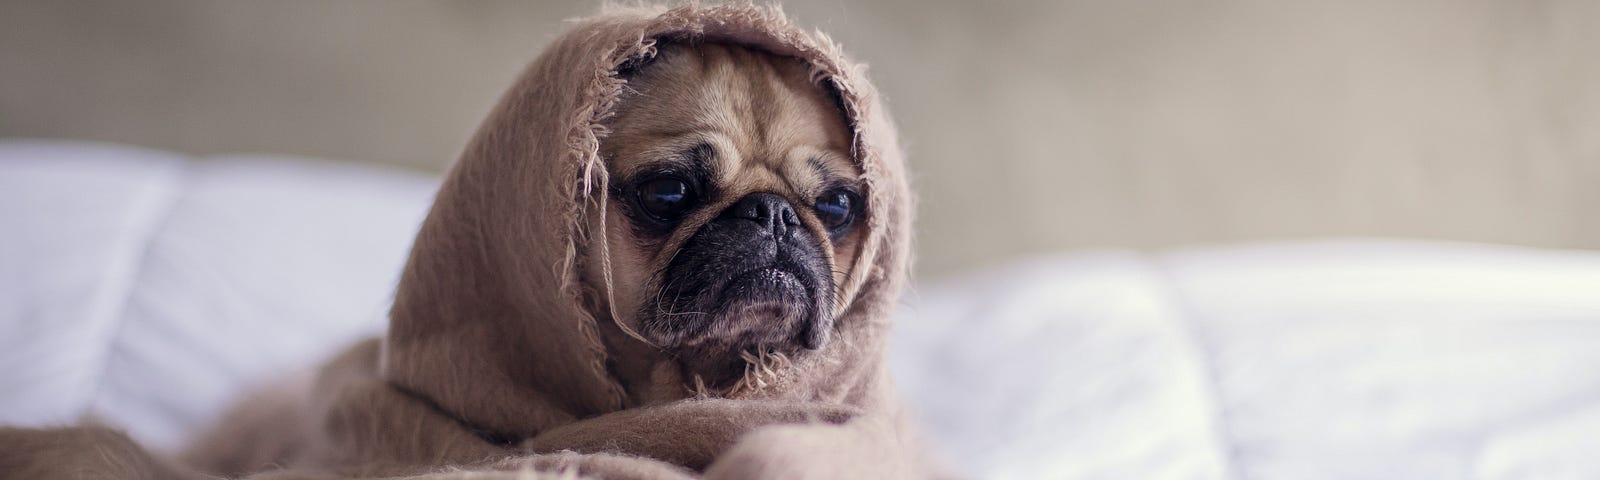 anxious pug dog under a blanket